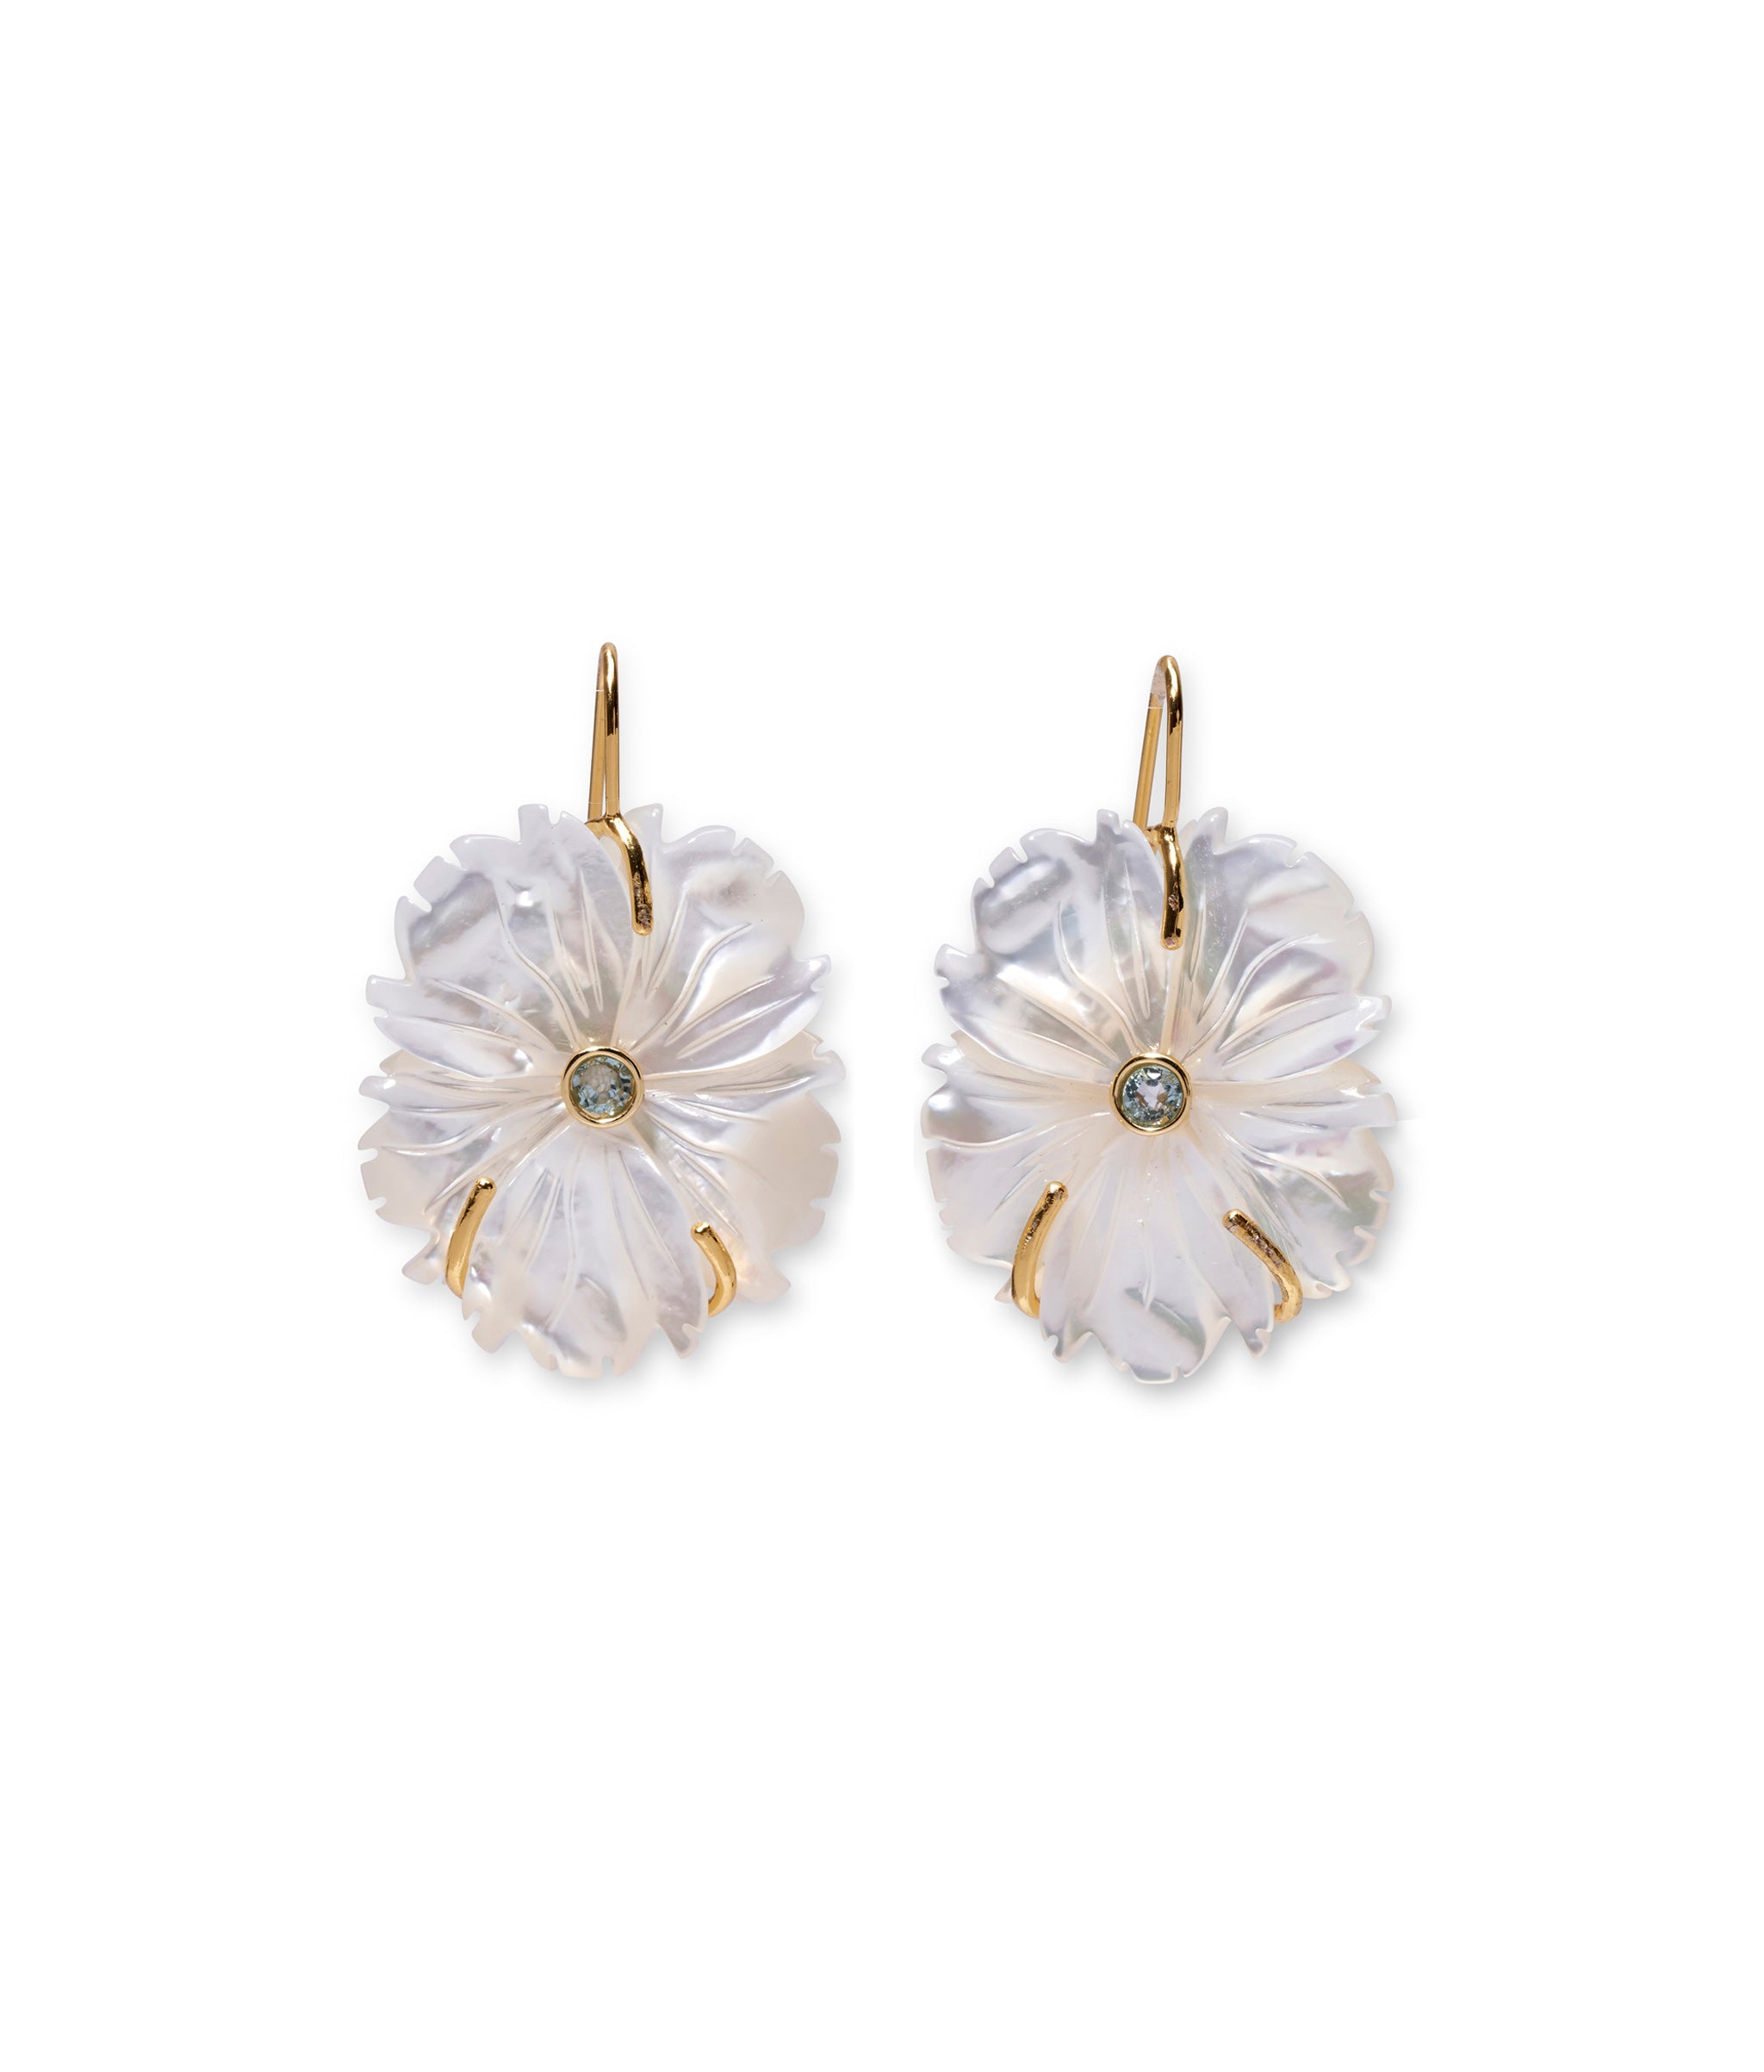 New Bloom Earrings in Mother-of-Pearl